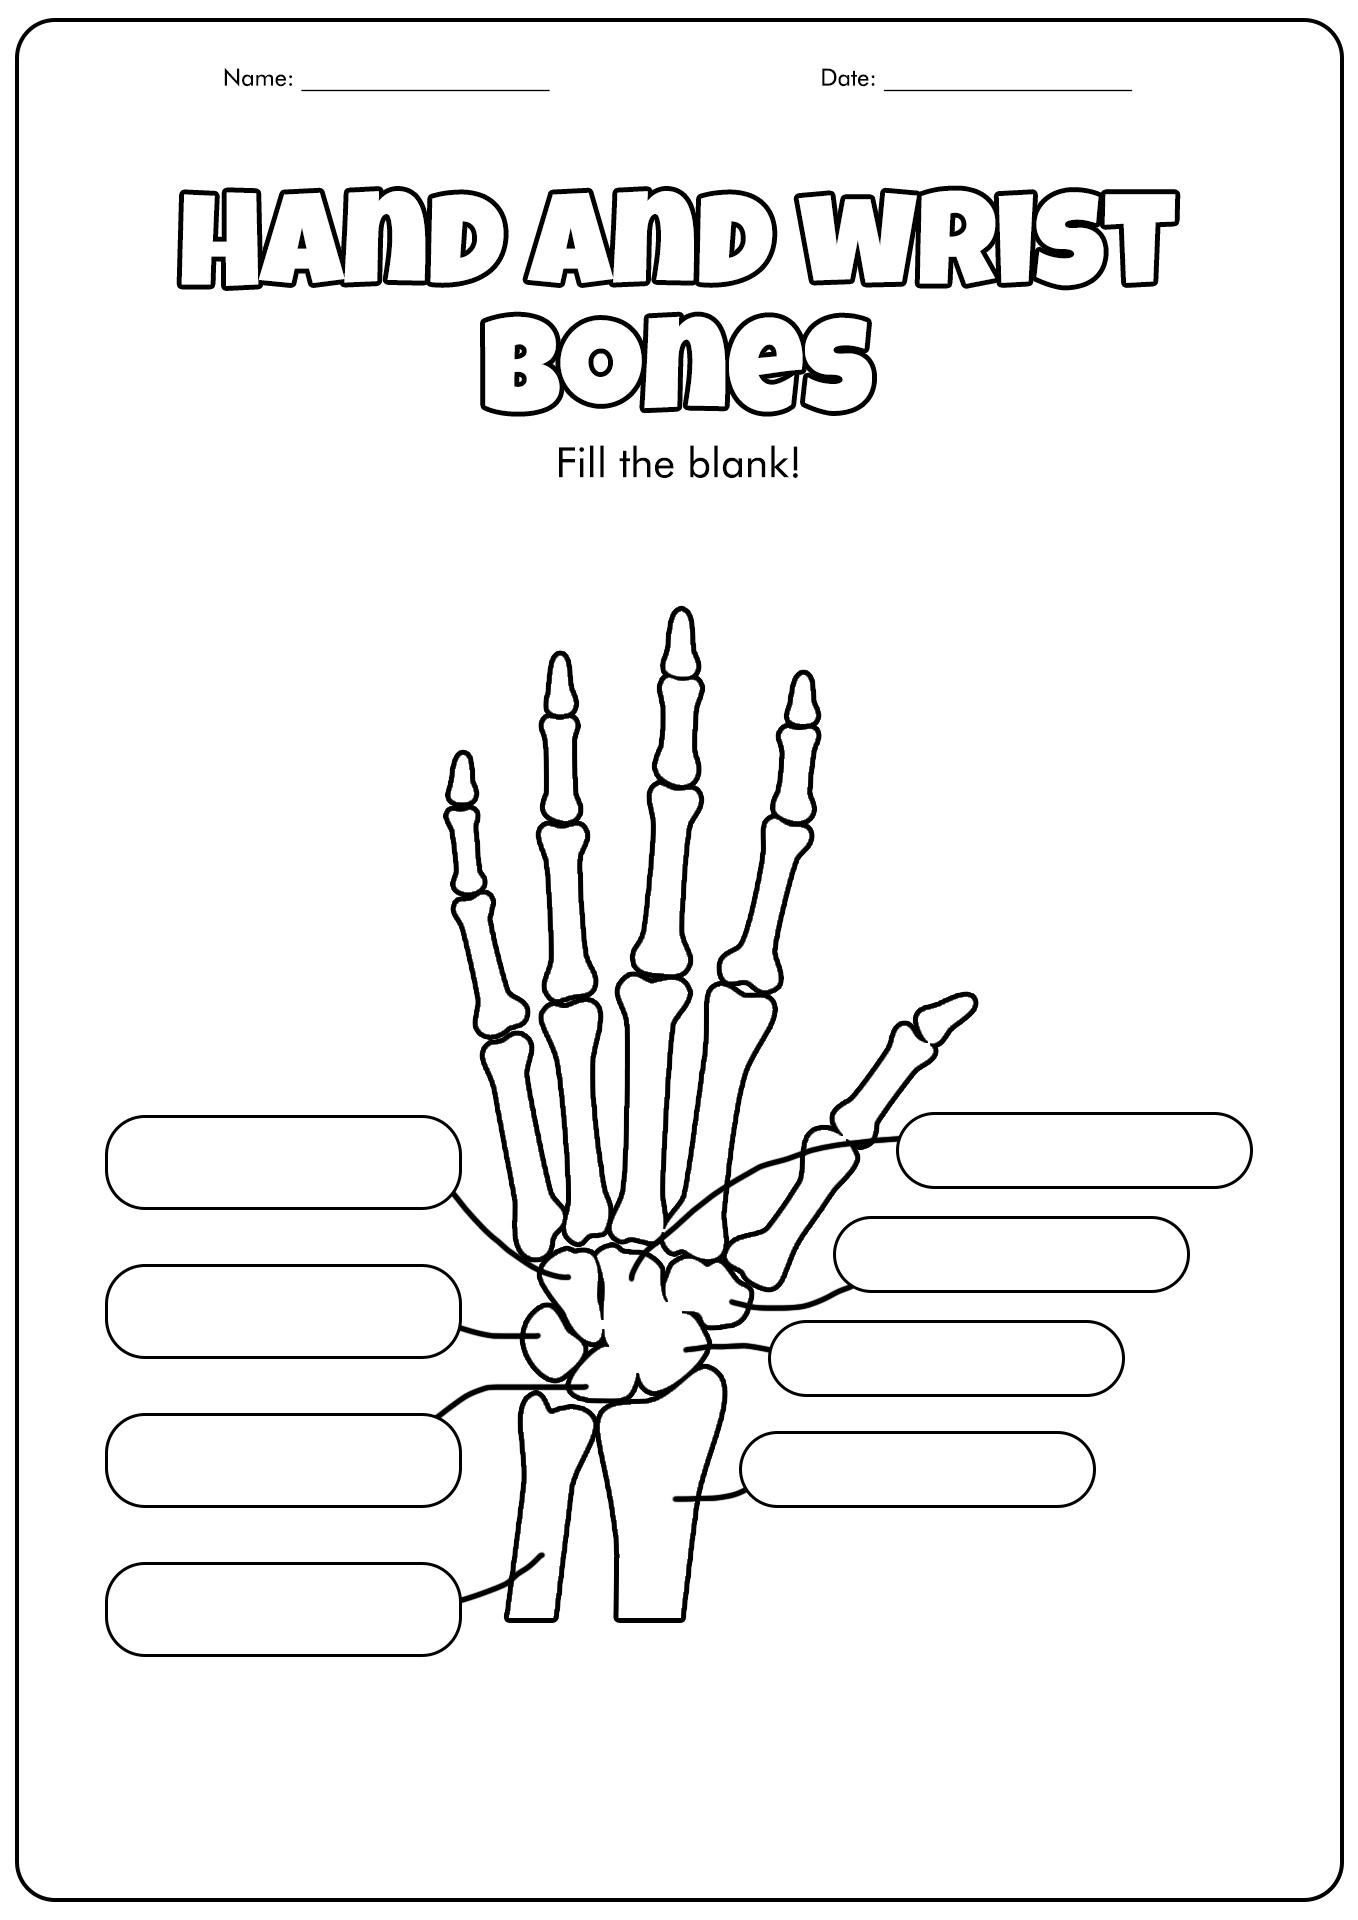 Hand and Wrist Bones Diagram Image